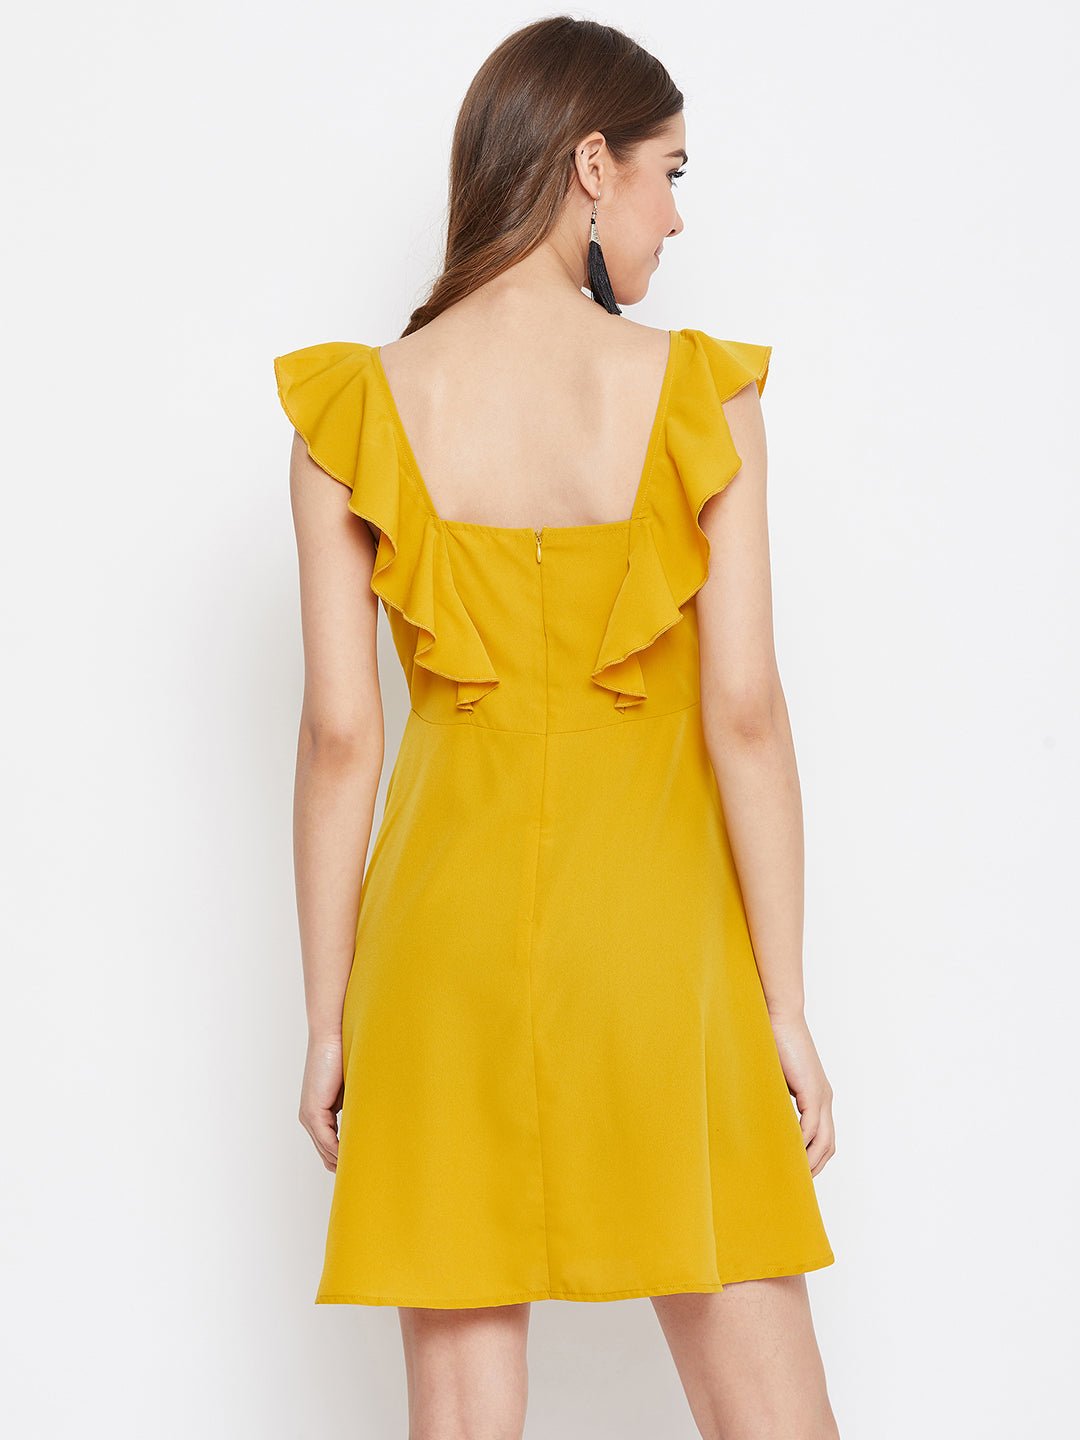 Folk Republic Women Solid Mustard Yellow Sleeveless Ruffled Fit & Flare Mini Dress - #folk republic#